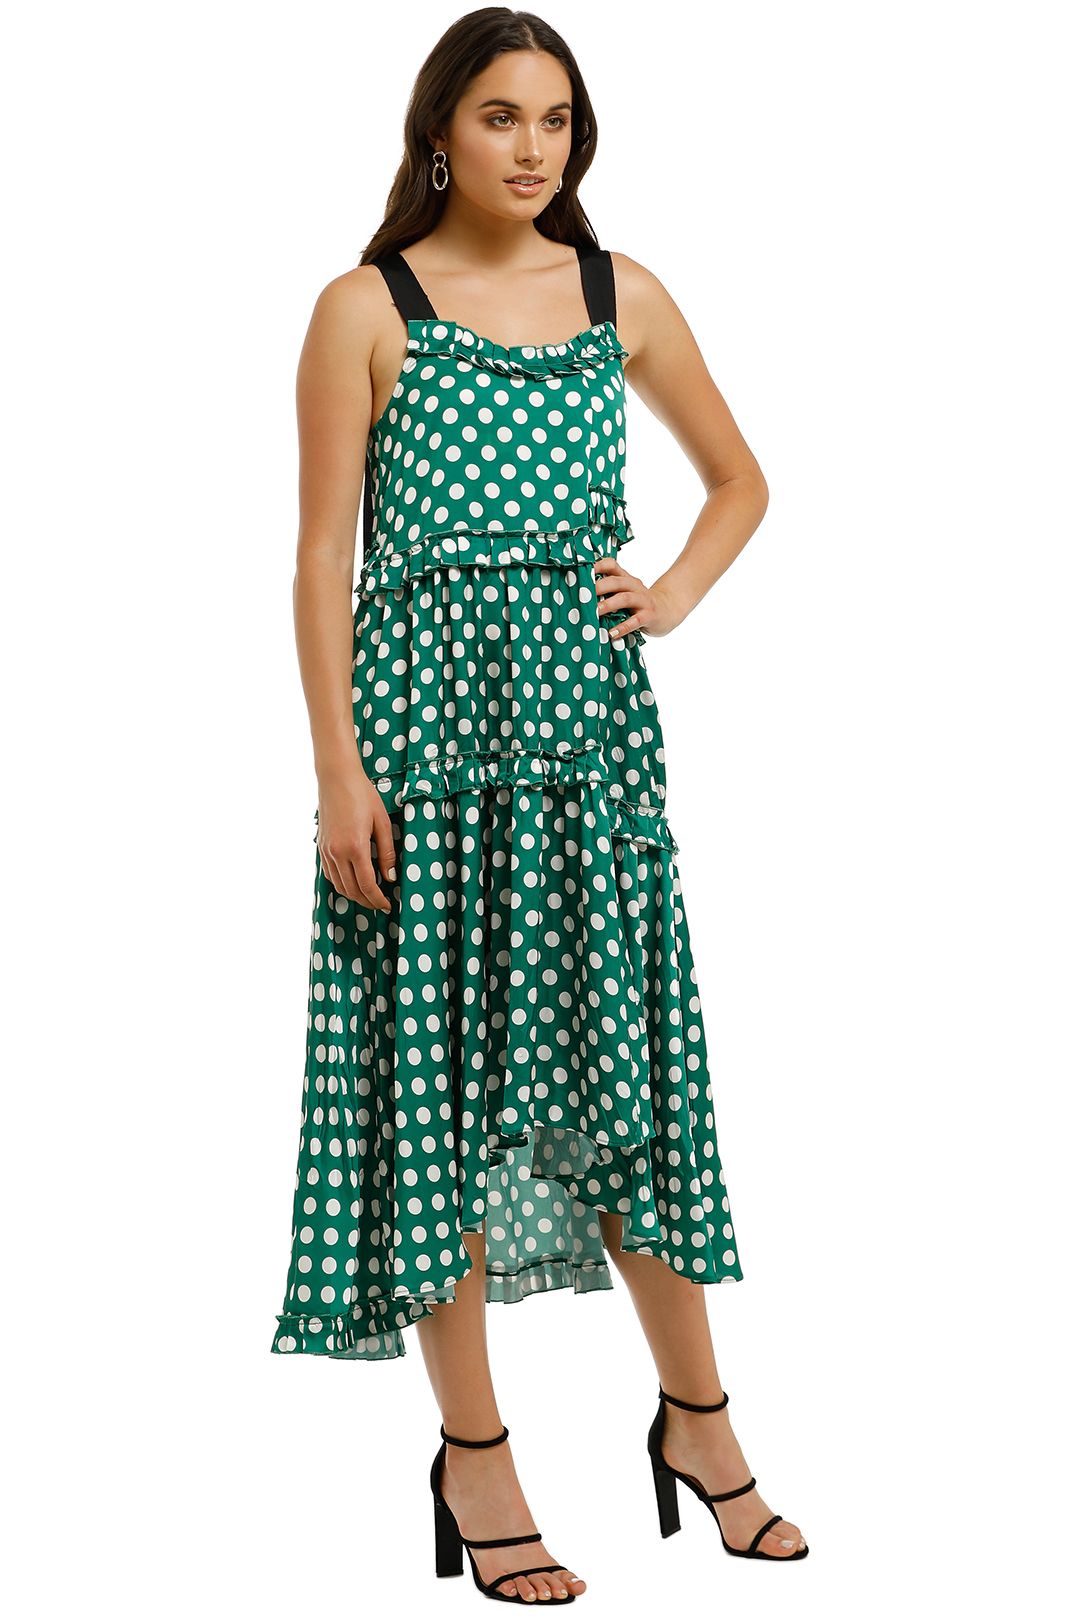 Trelise-Cooper-Pleat-Wave-Dress-Green-Side